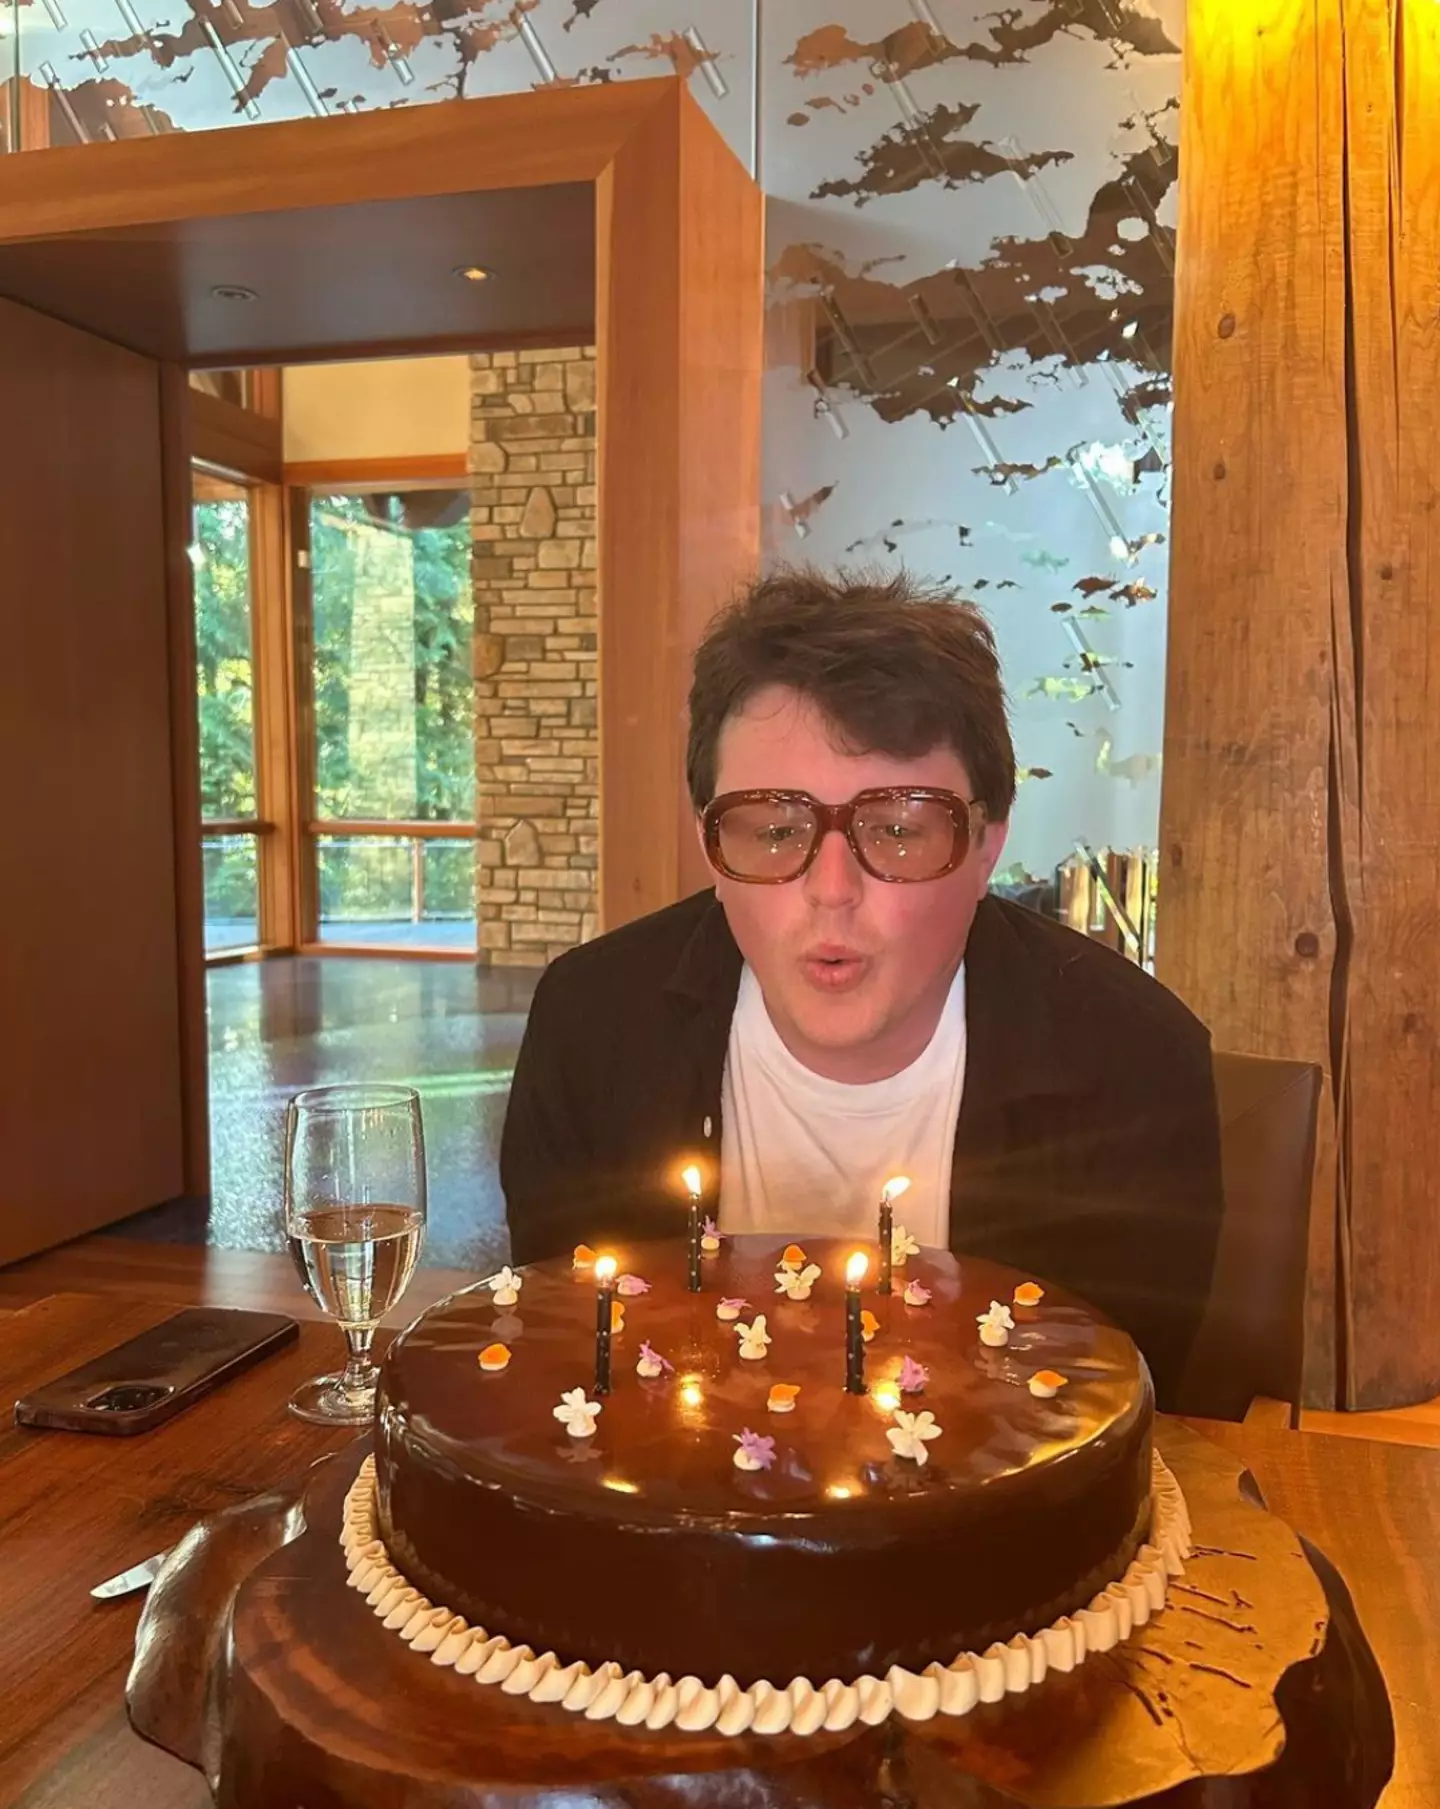 Sam Michael Fox with his delicious chocolate birthday cake.